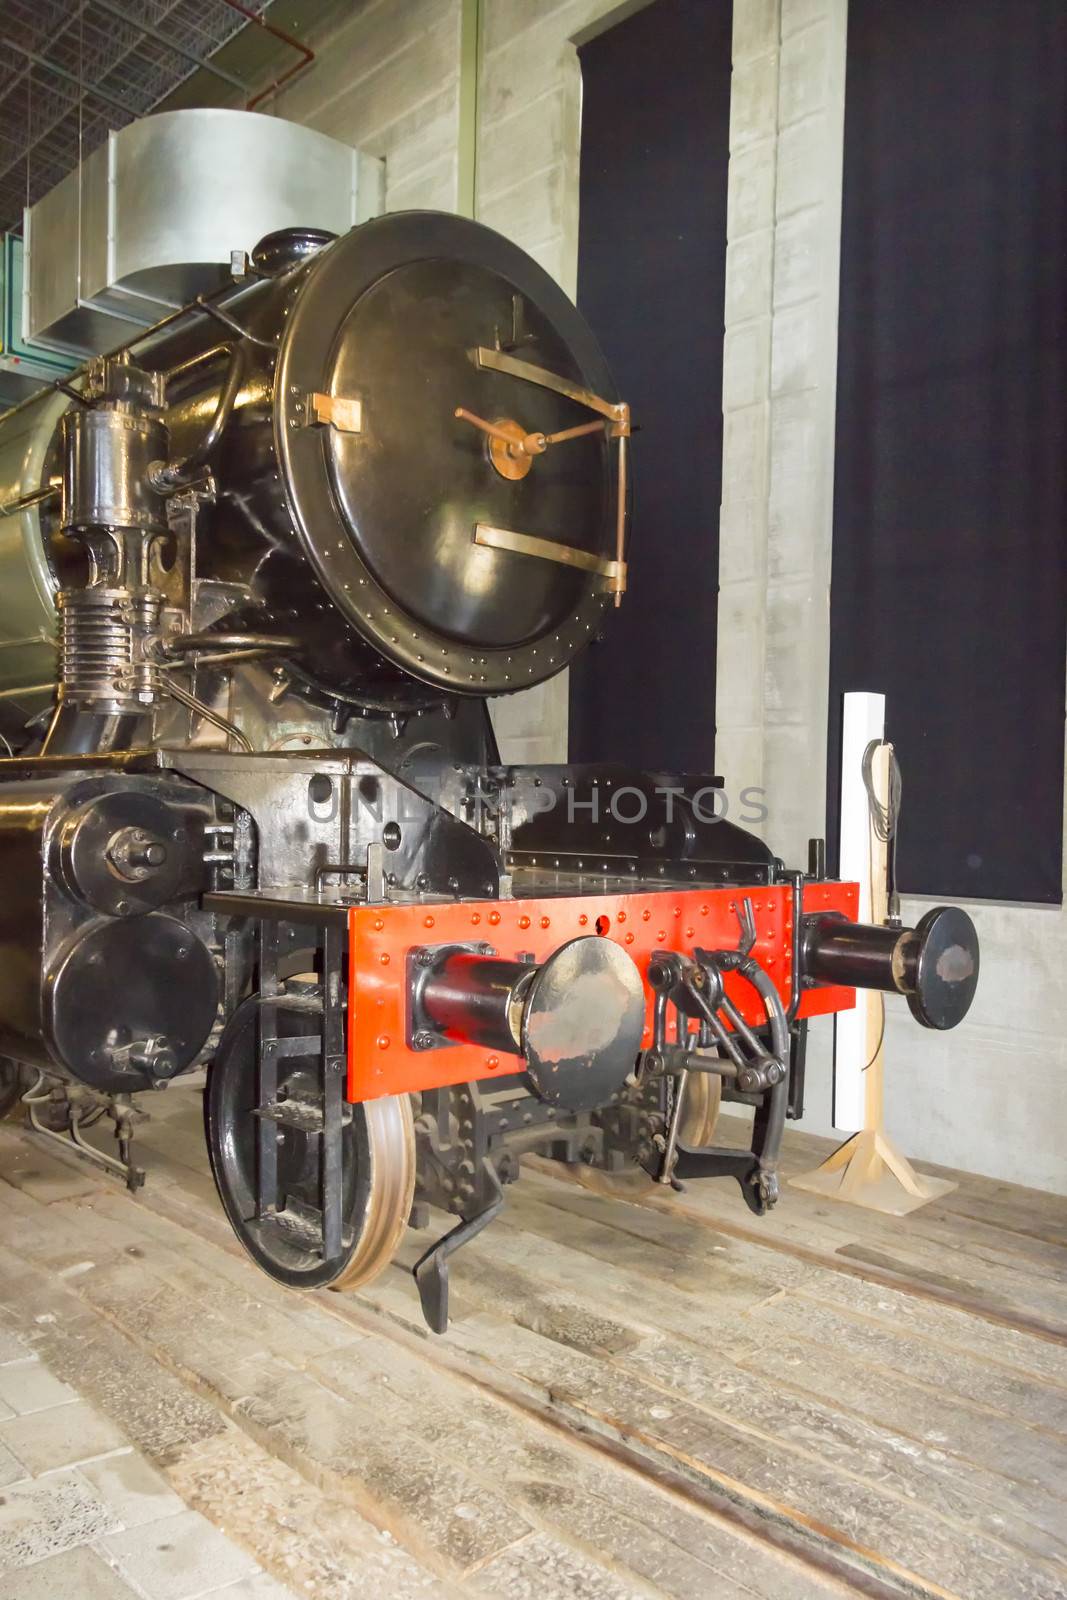 stem locomotive in Utrecht Railroad Museum, the Netherlands